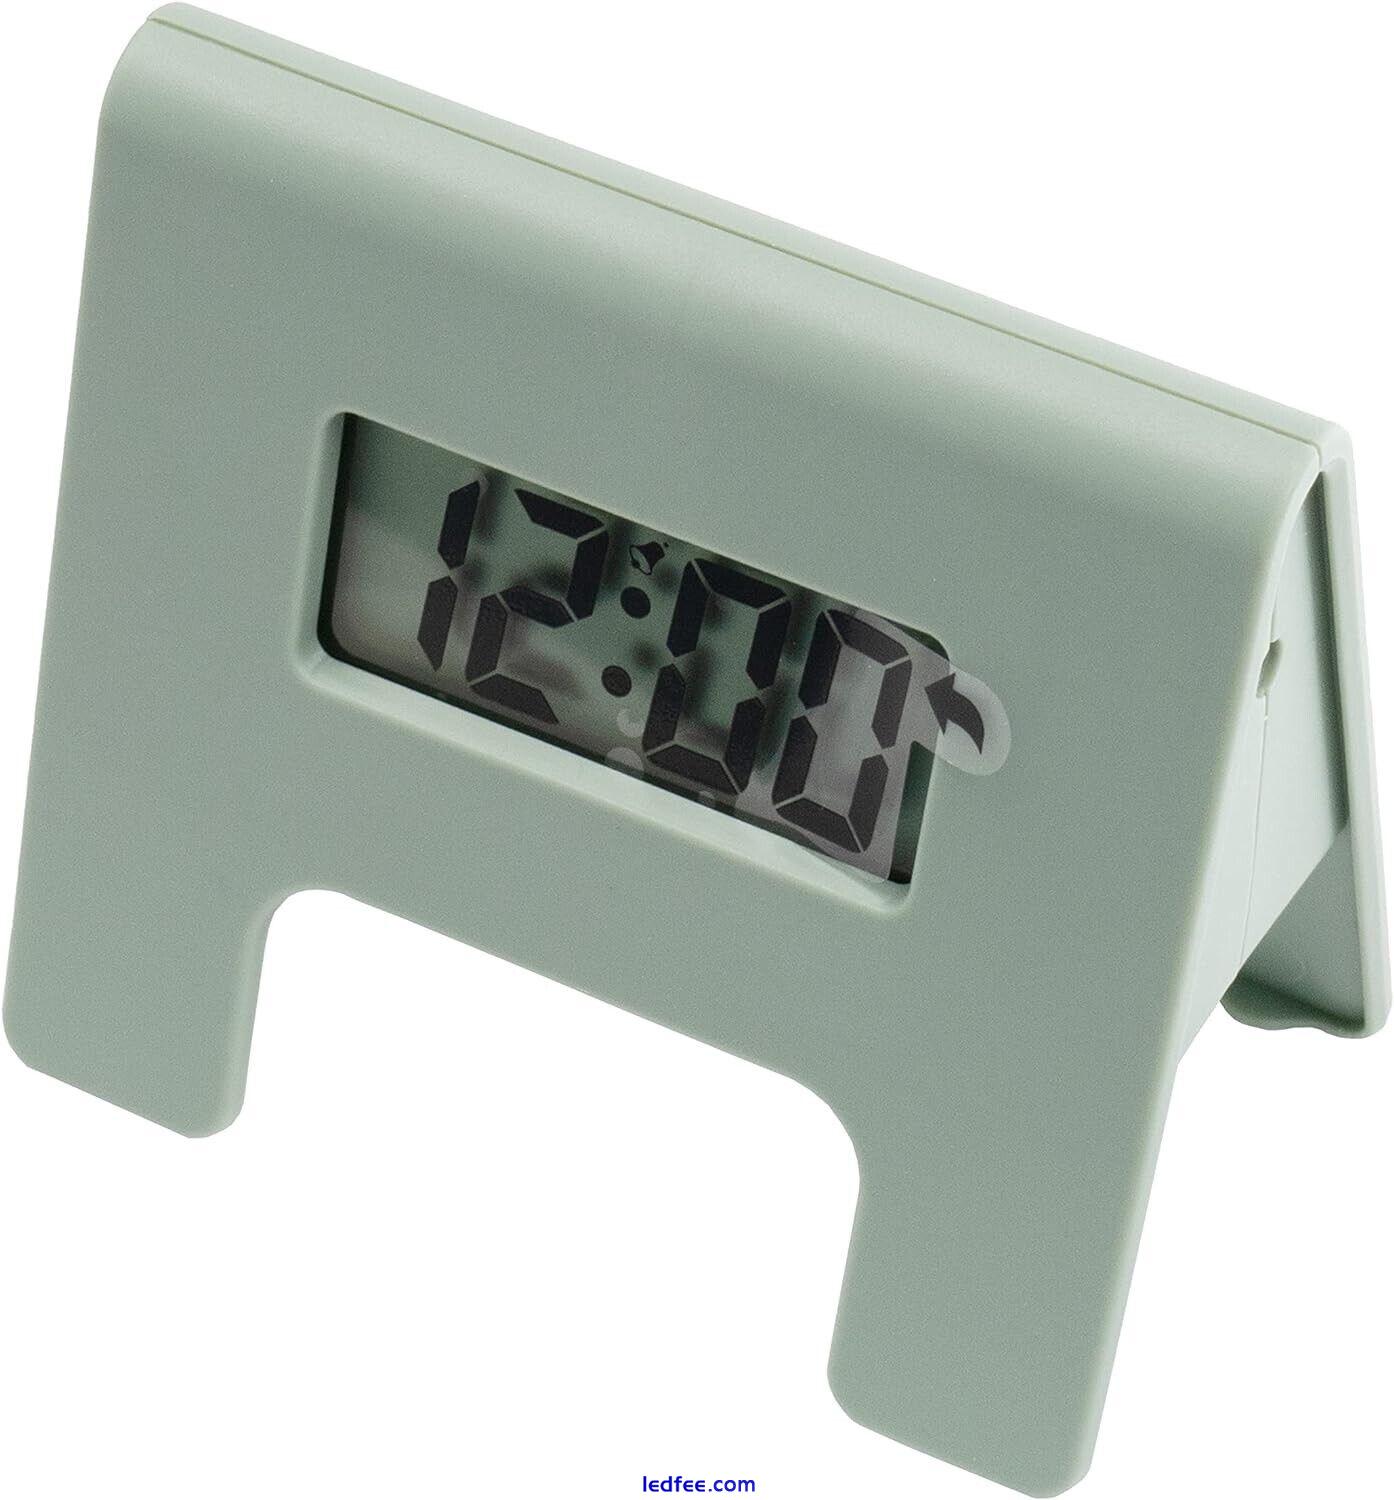 Digital Alarm Clock Bedside Snooze LED Display Clocks Wake Up on Time New UK 2 